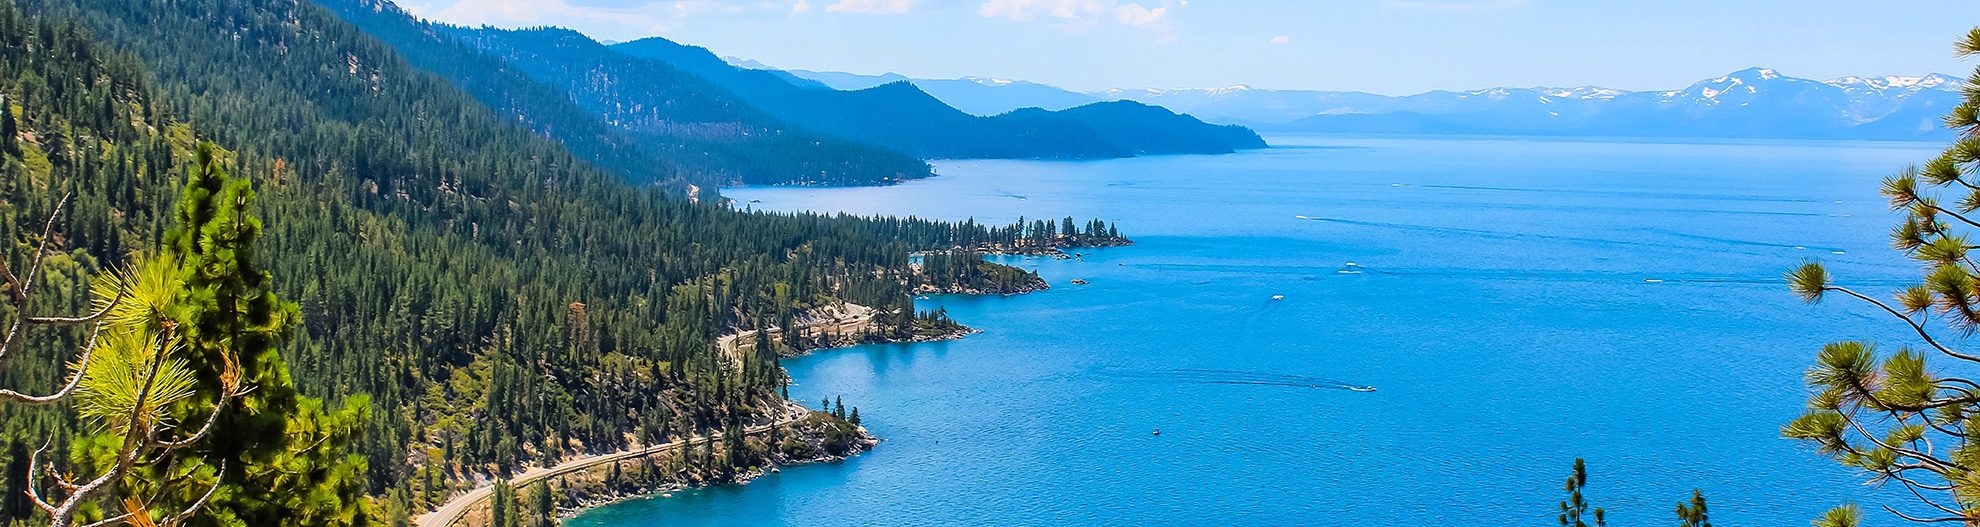 Scenic coastline of Lake Tahoe